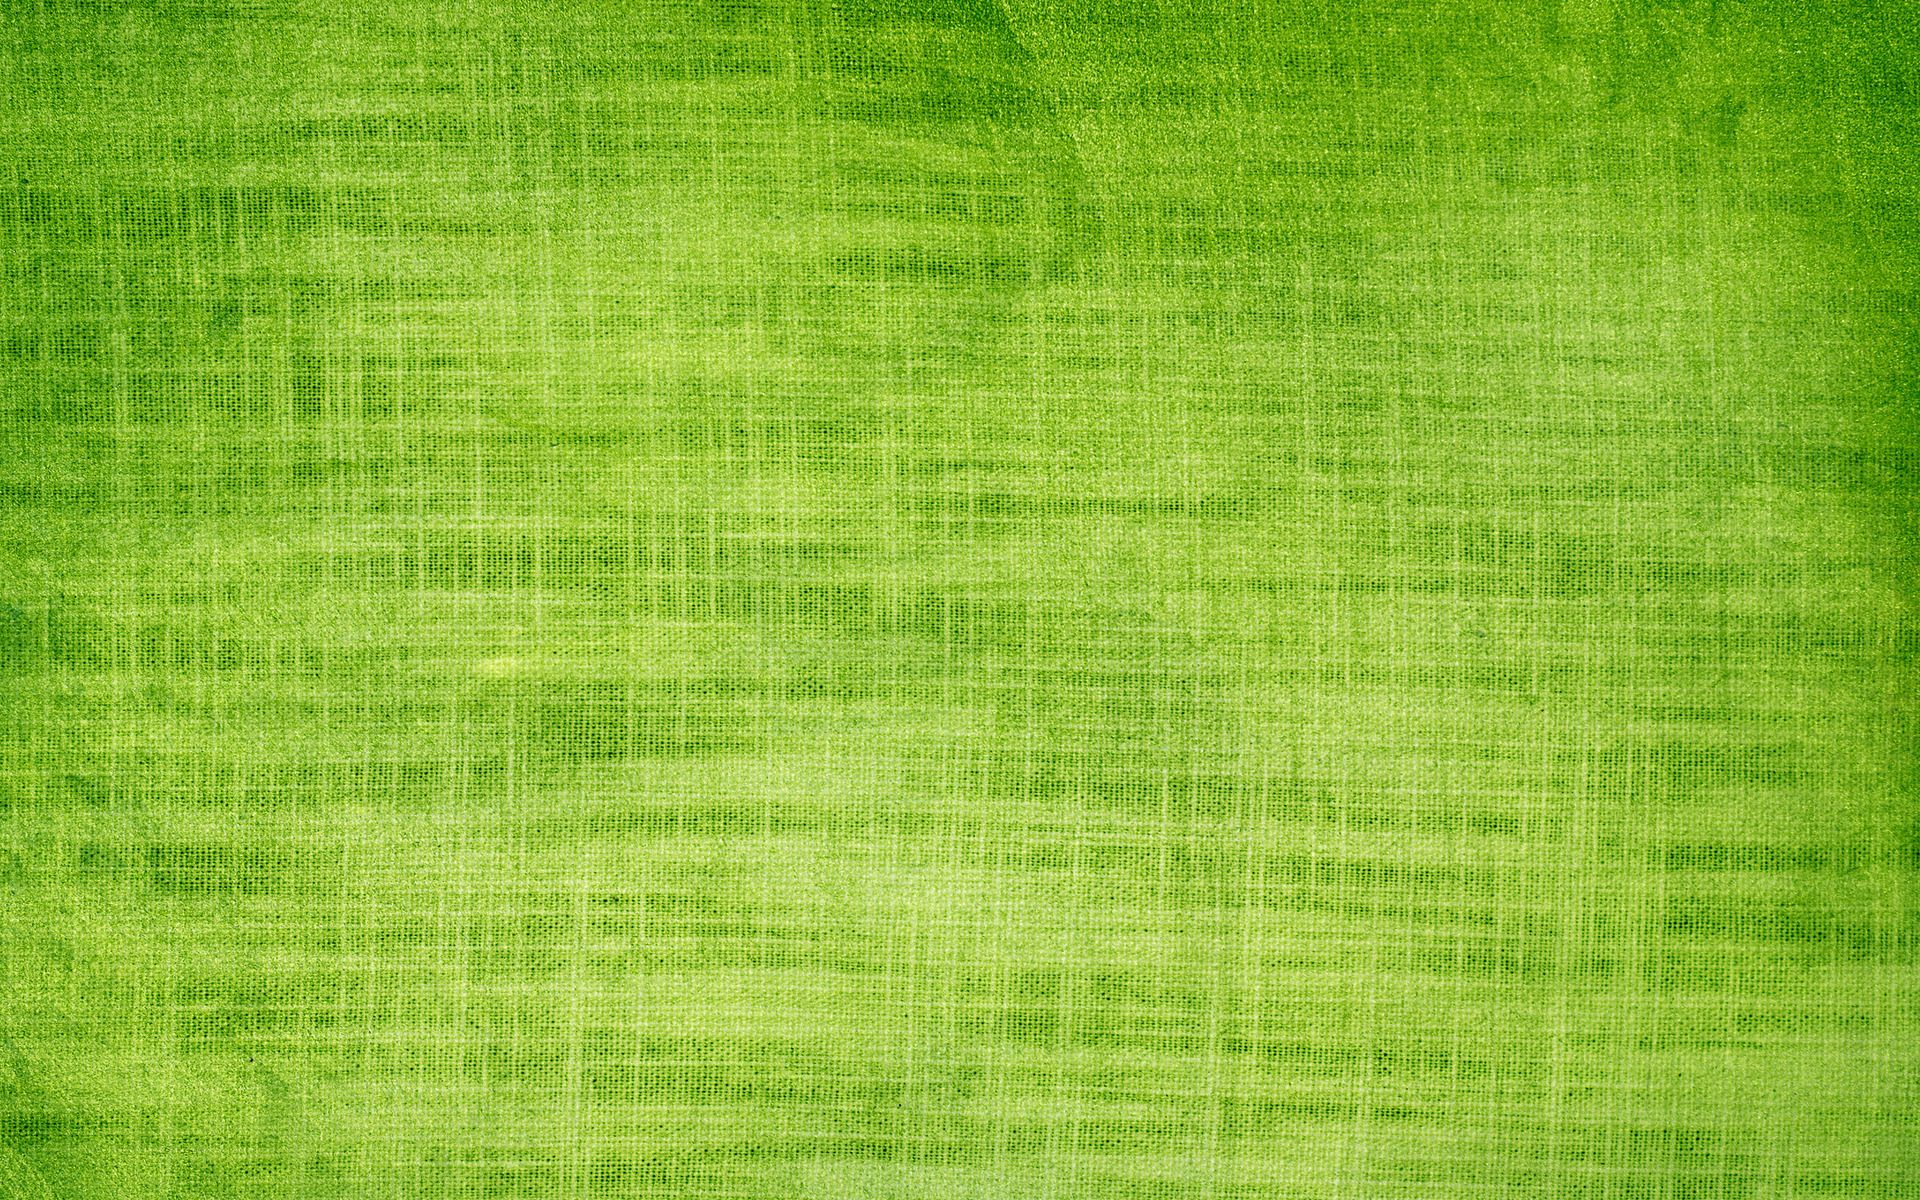 Keyword: Texture - Wonderful HD Wallpapers - WallpaperLayer.com